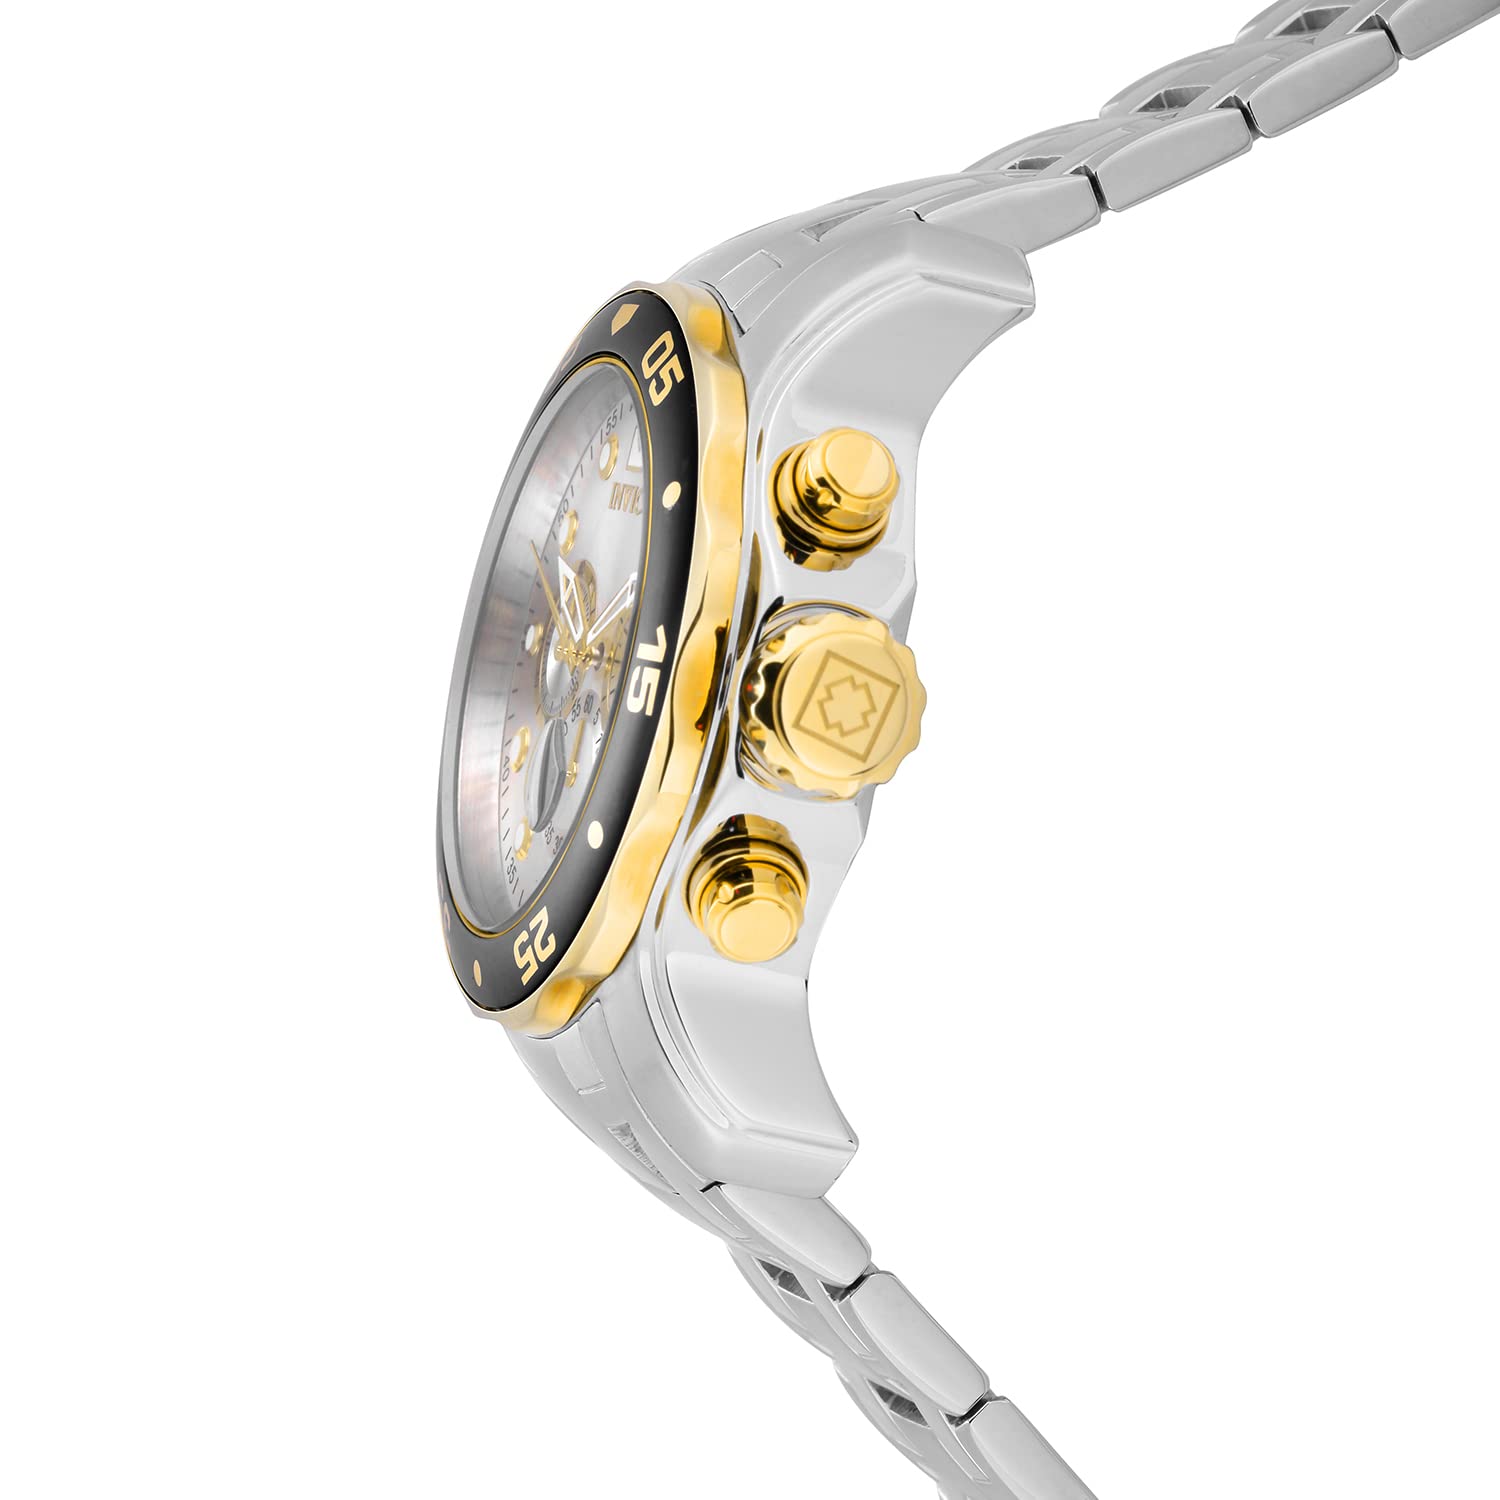 Invicta Men's 80040 Pro Diver Analog Display Swiss Quartz Silver Watch